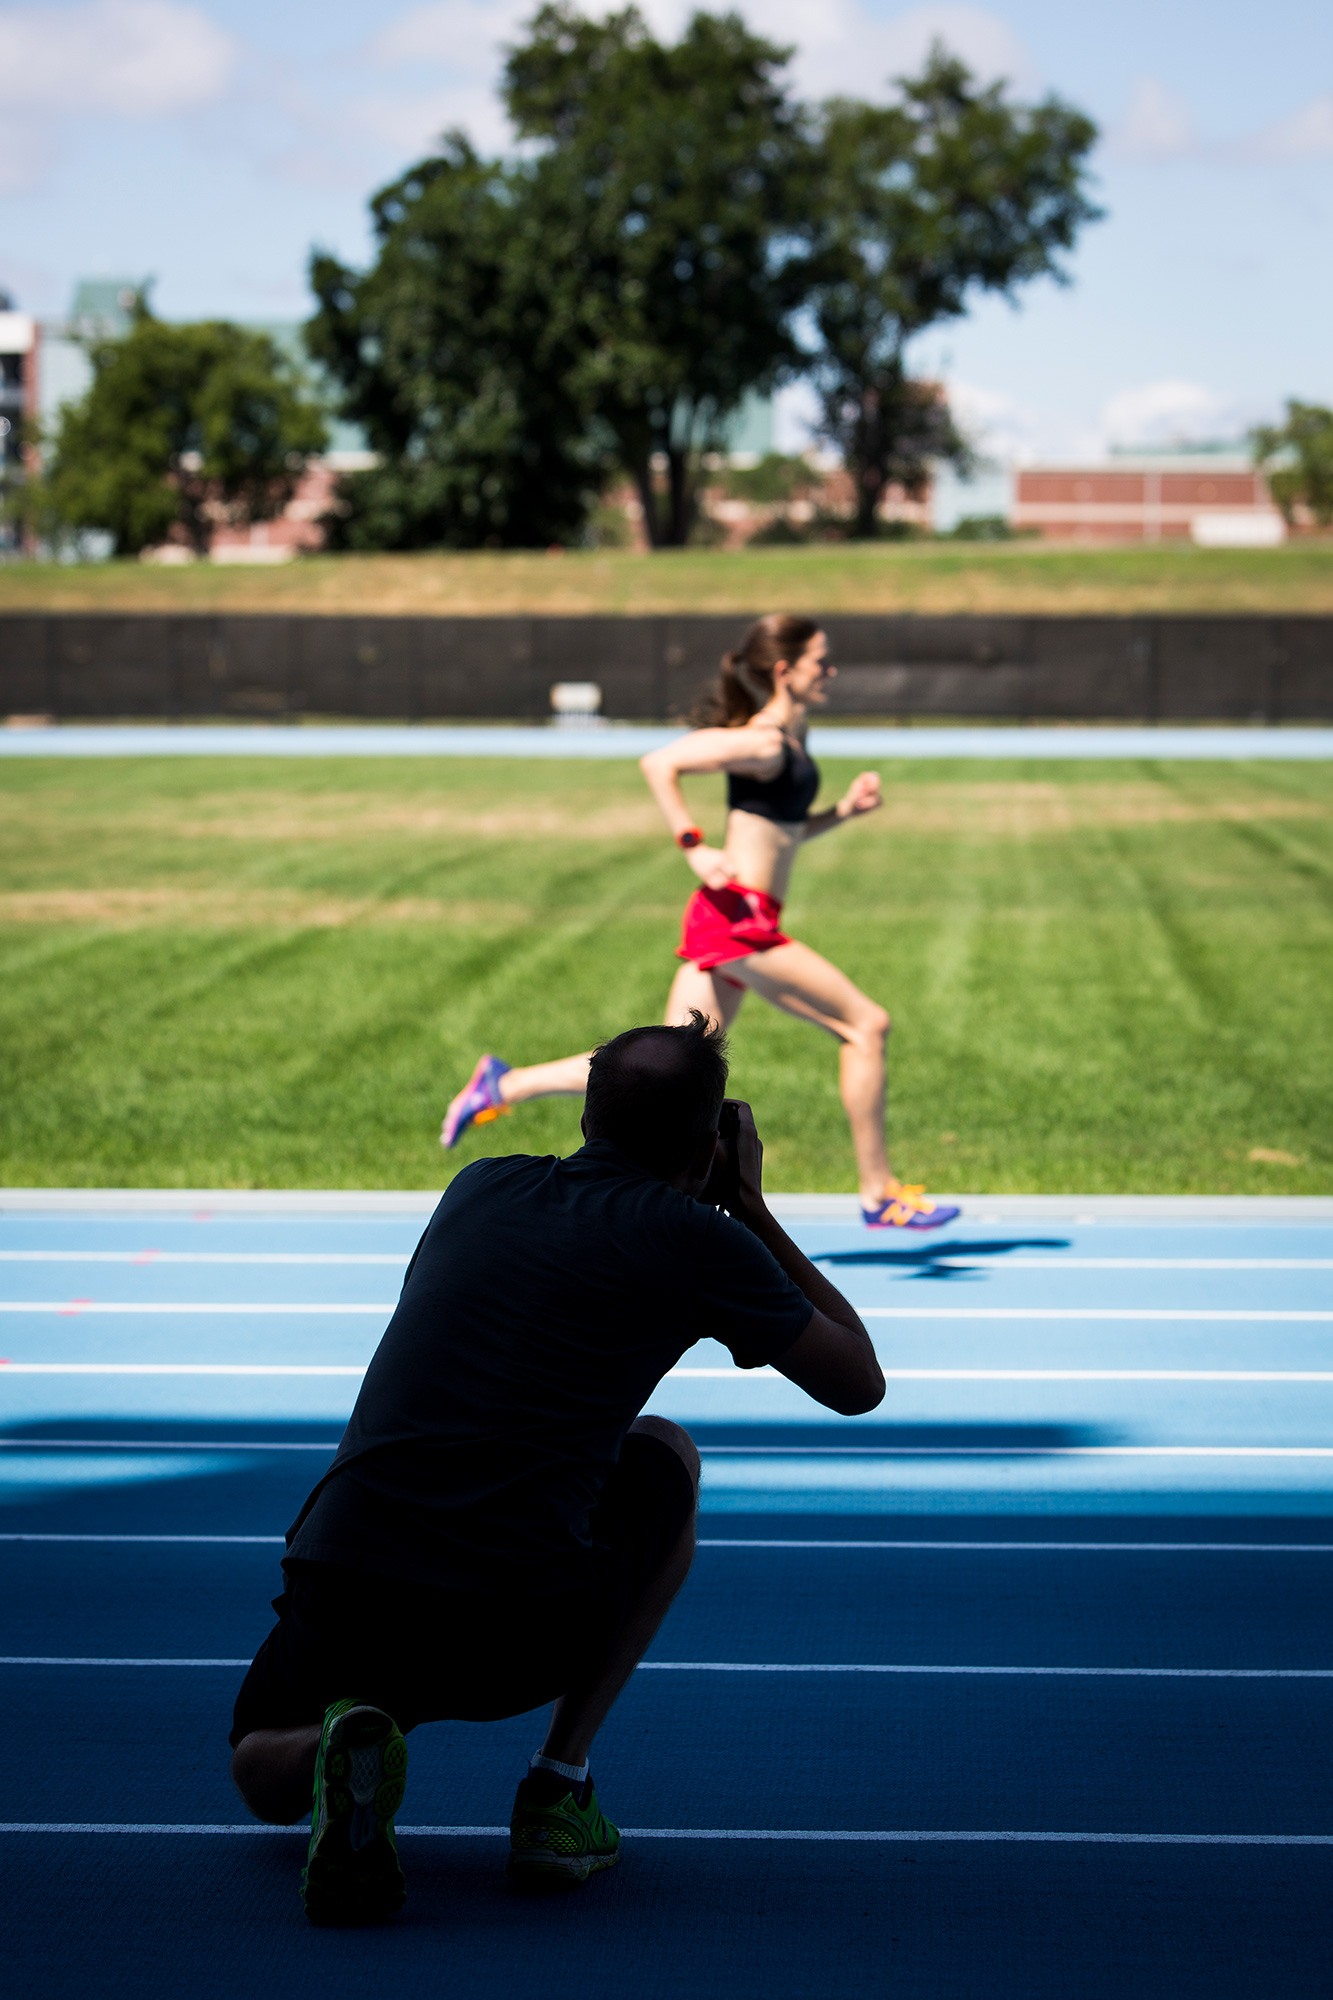 Philadelphia Sports Photographer Steve Boyle  - Behind the Scenes Photoshoot - Track Running